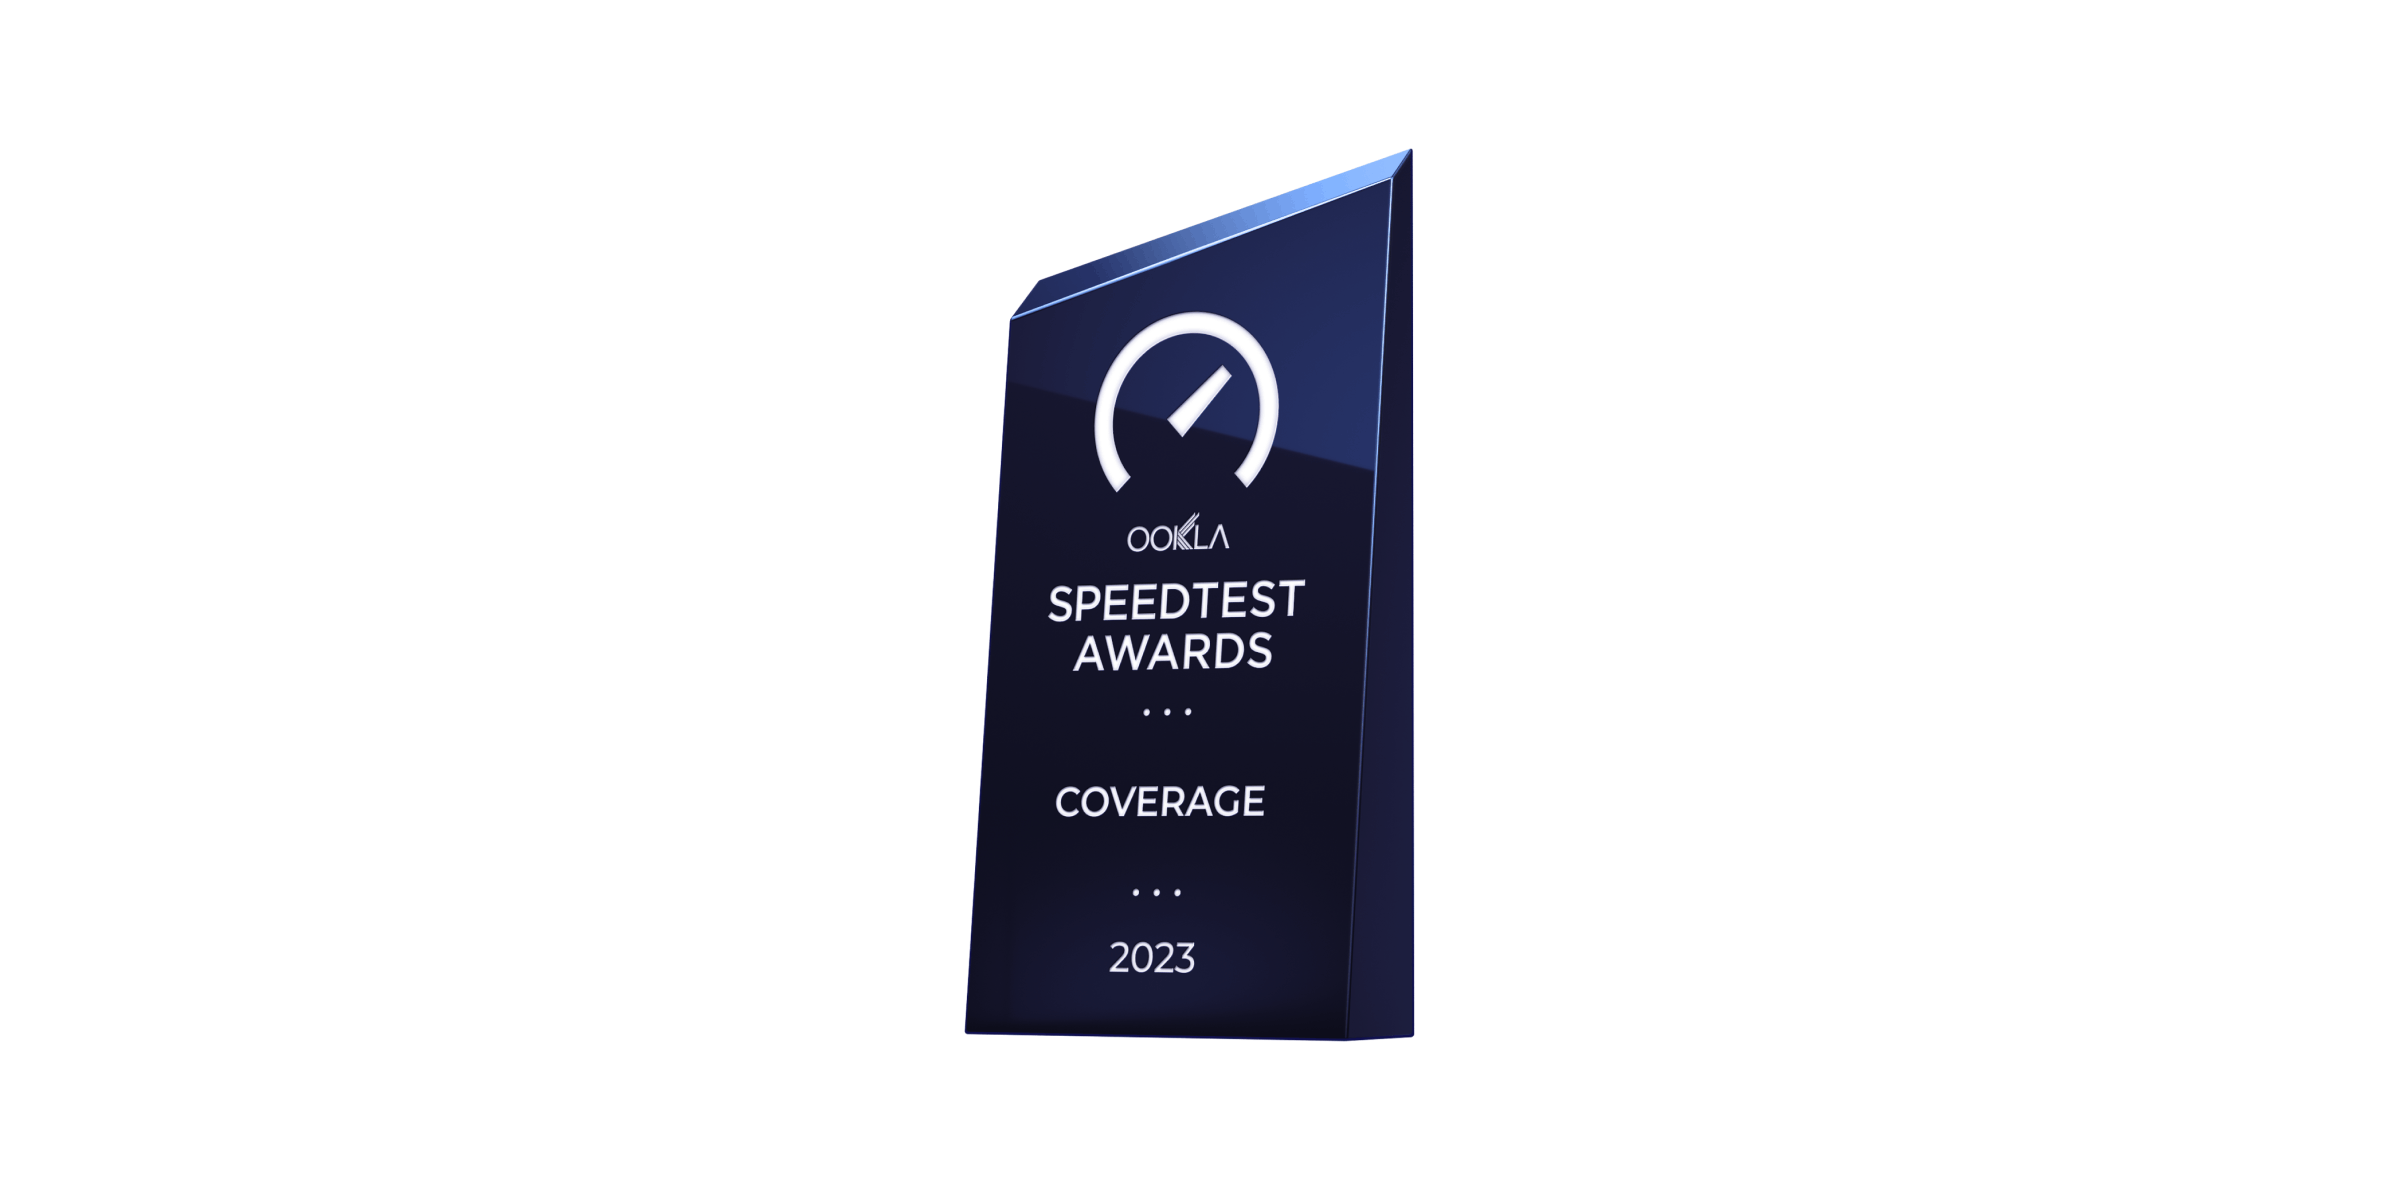 Speedtest awards: coverage 2023